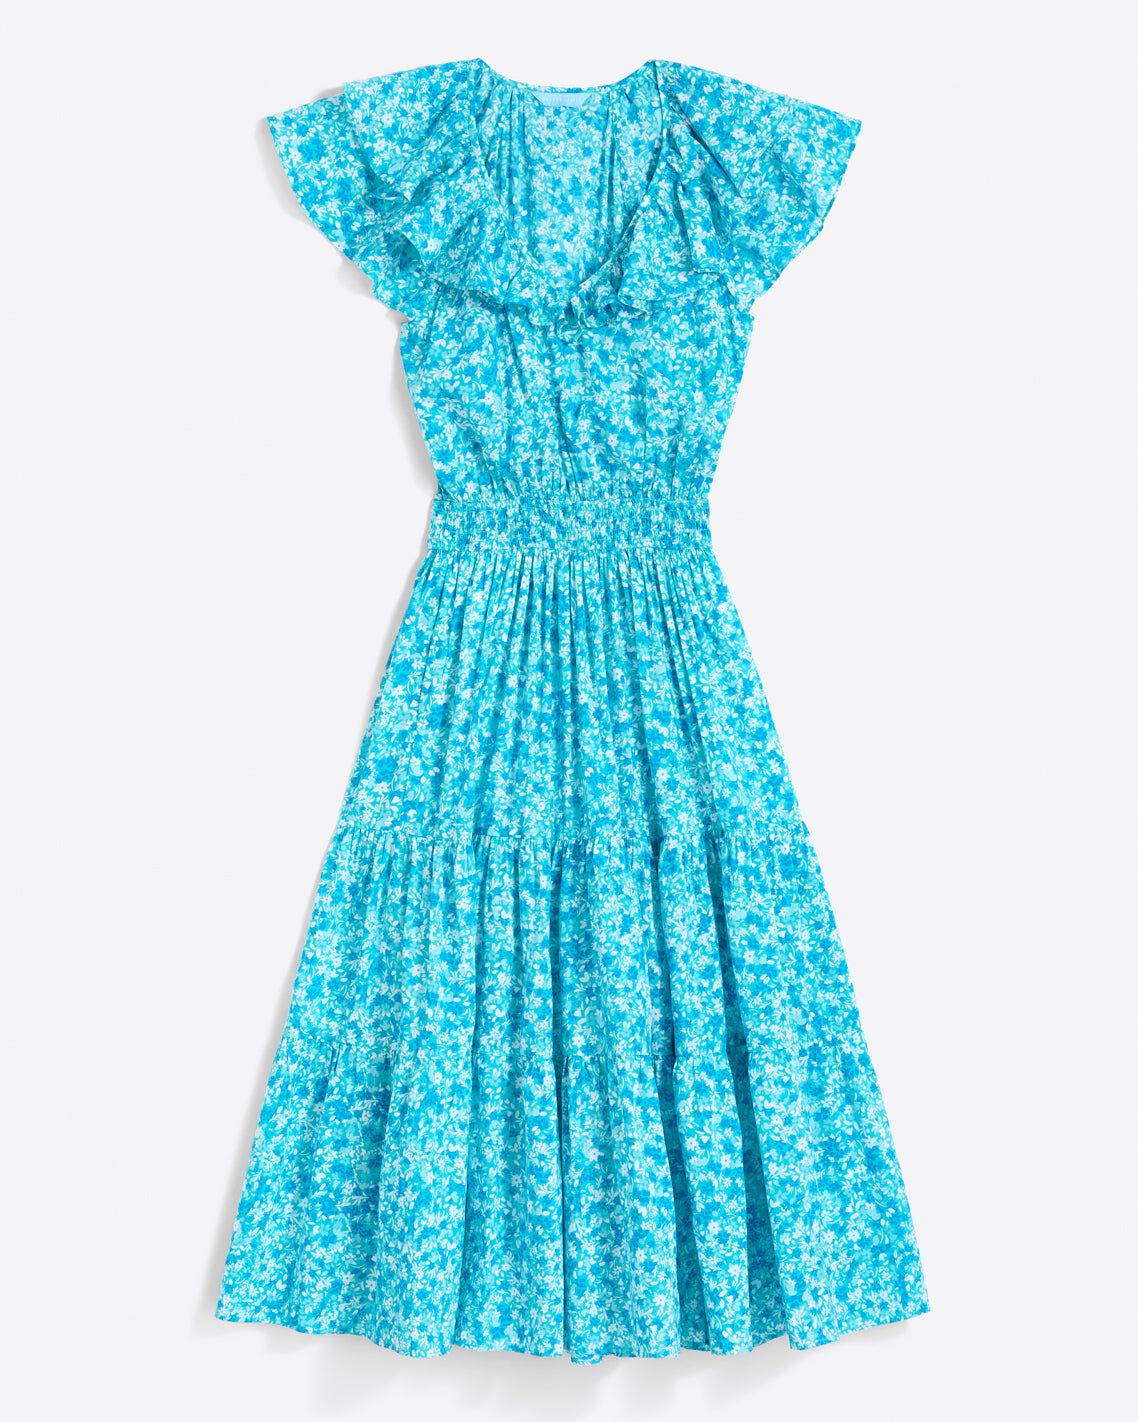 Marie Midi Dress in Blue Aster Floral | Draper James (US)